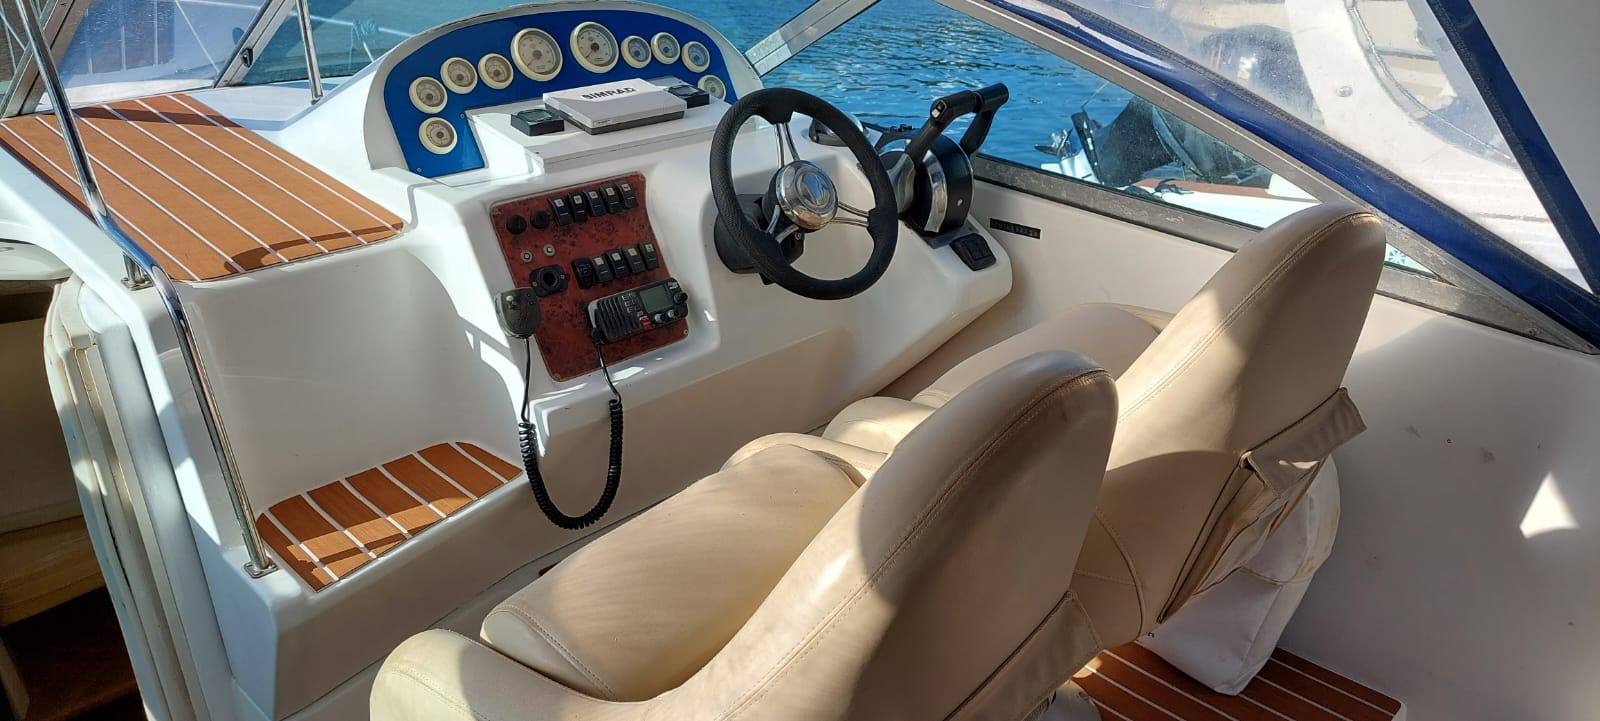 Regal Valanti 260 + 2x220 hp Mercruiser daycruiser livorno boats barco bateaux boat used natante barca usata